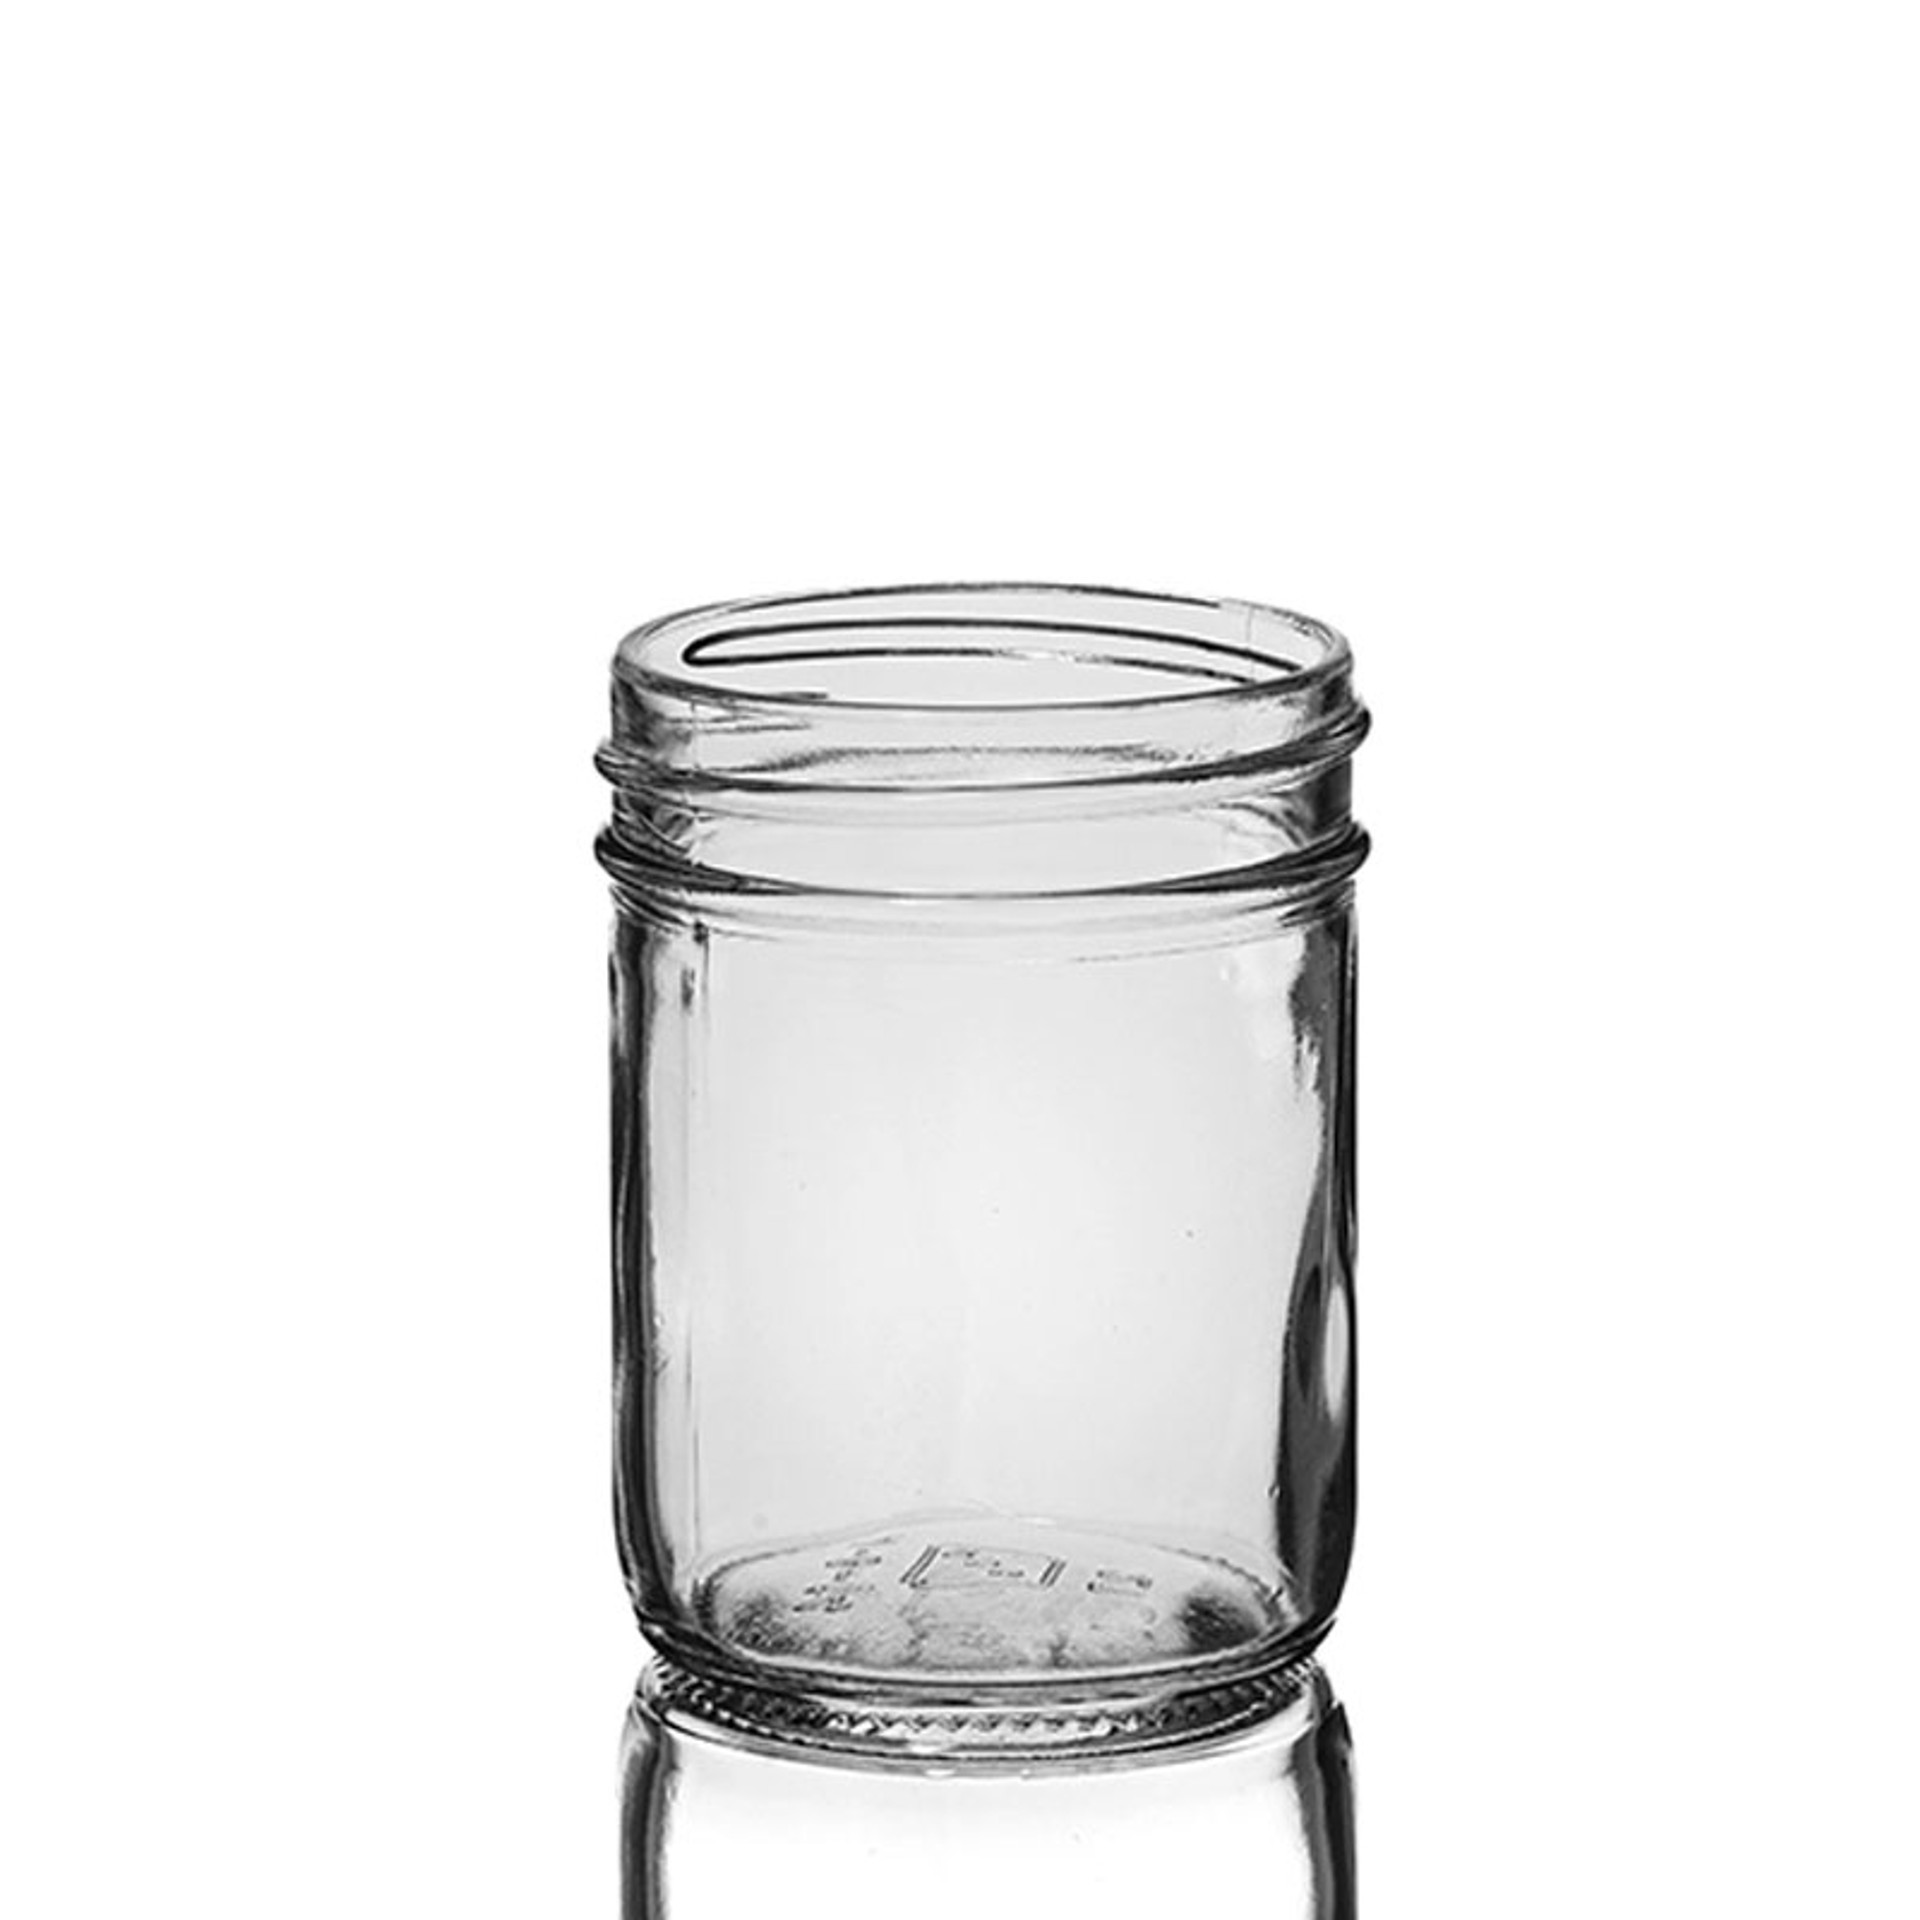 12 oz Clear Glass Jar 70-2035 Lug Neck Finish, Round Base